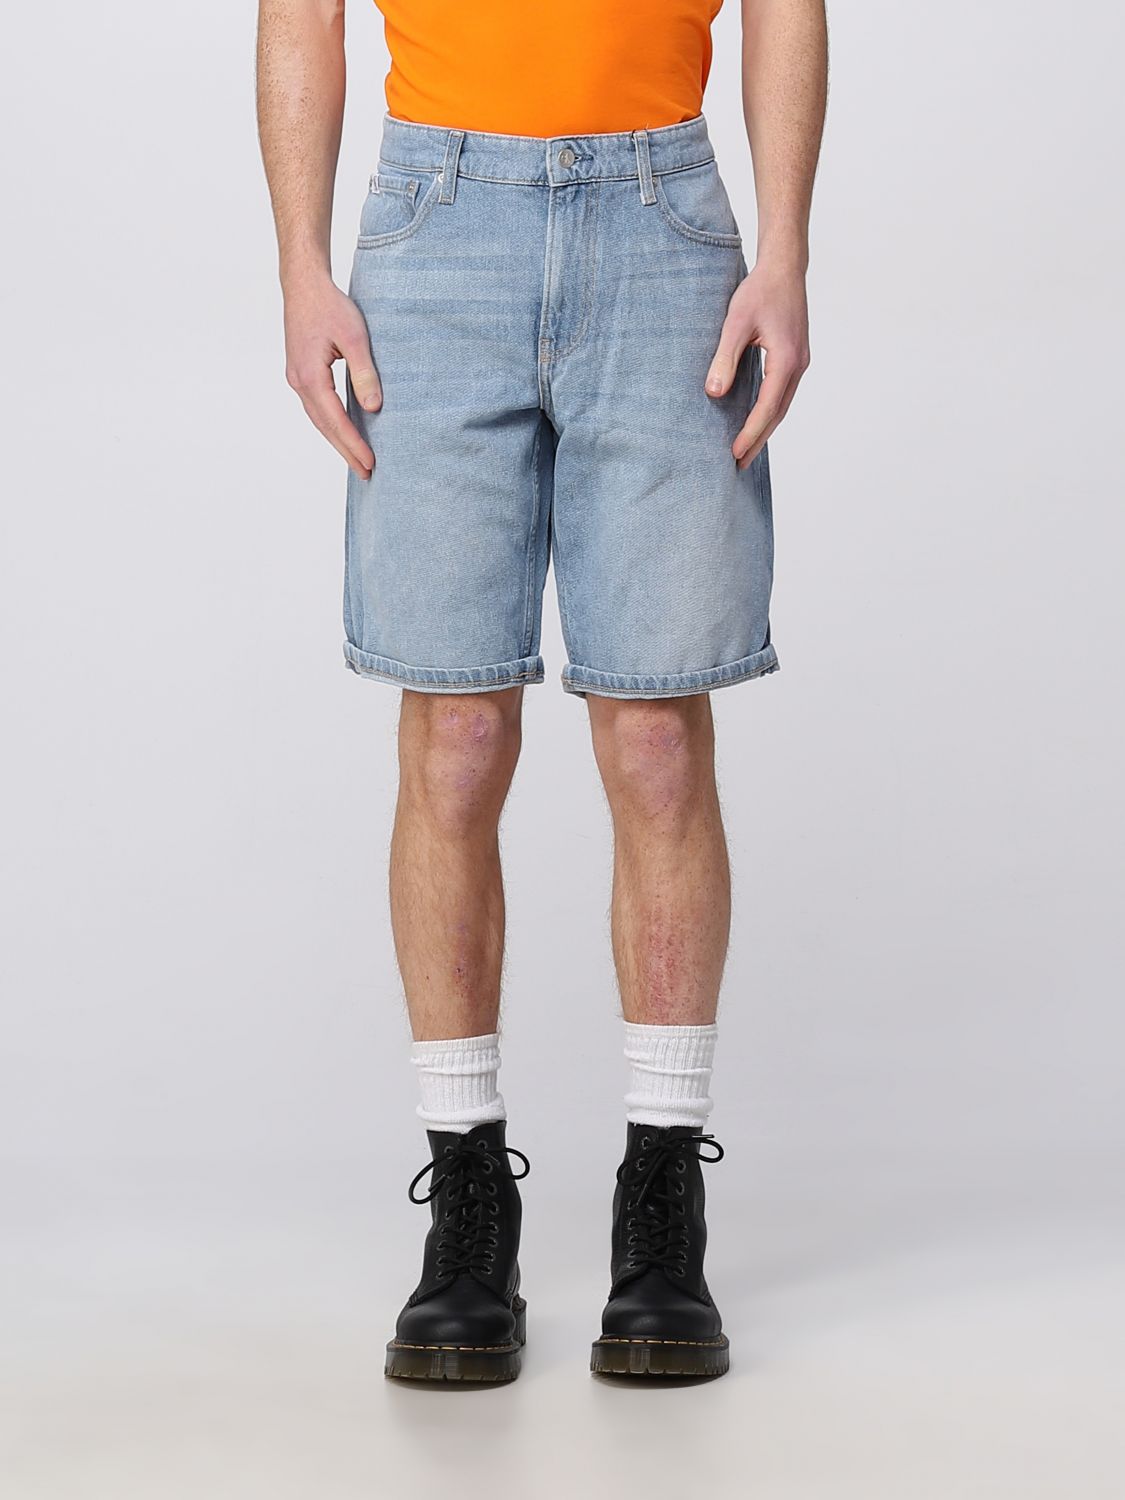 CALVIN KLEIN JEANS: Pantalones cortos para Denim | Pantalones Cortos Calvin Klein Jeans J30J322788 en línea en GIGLIO.COM